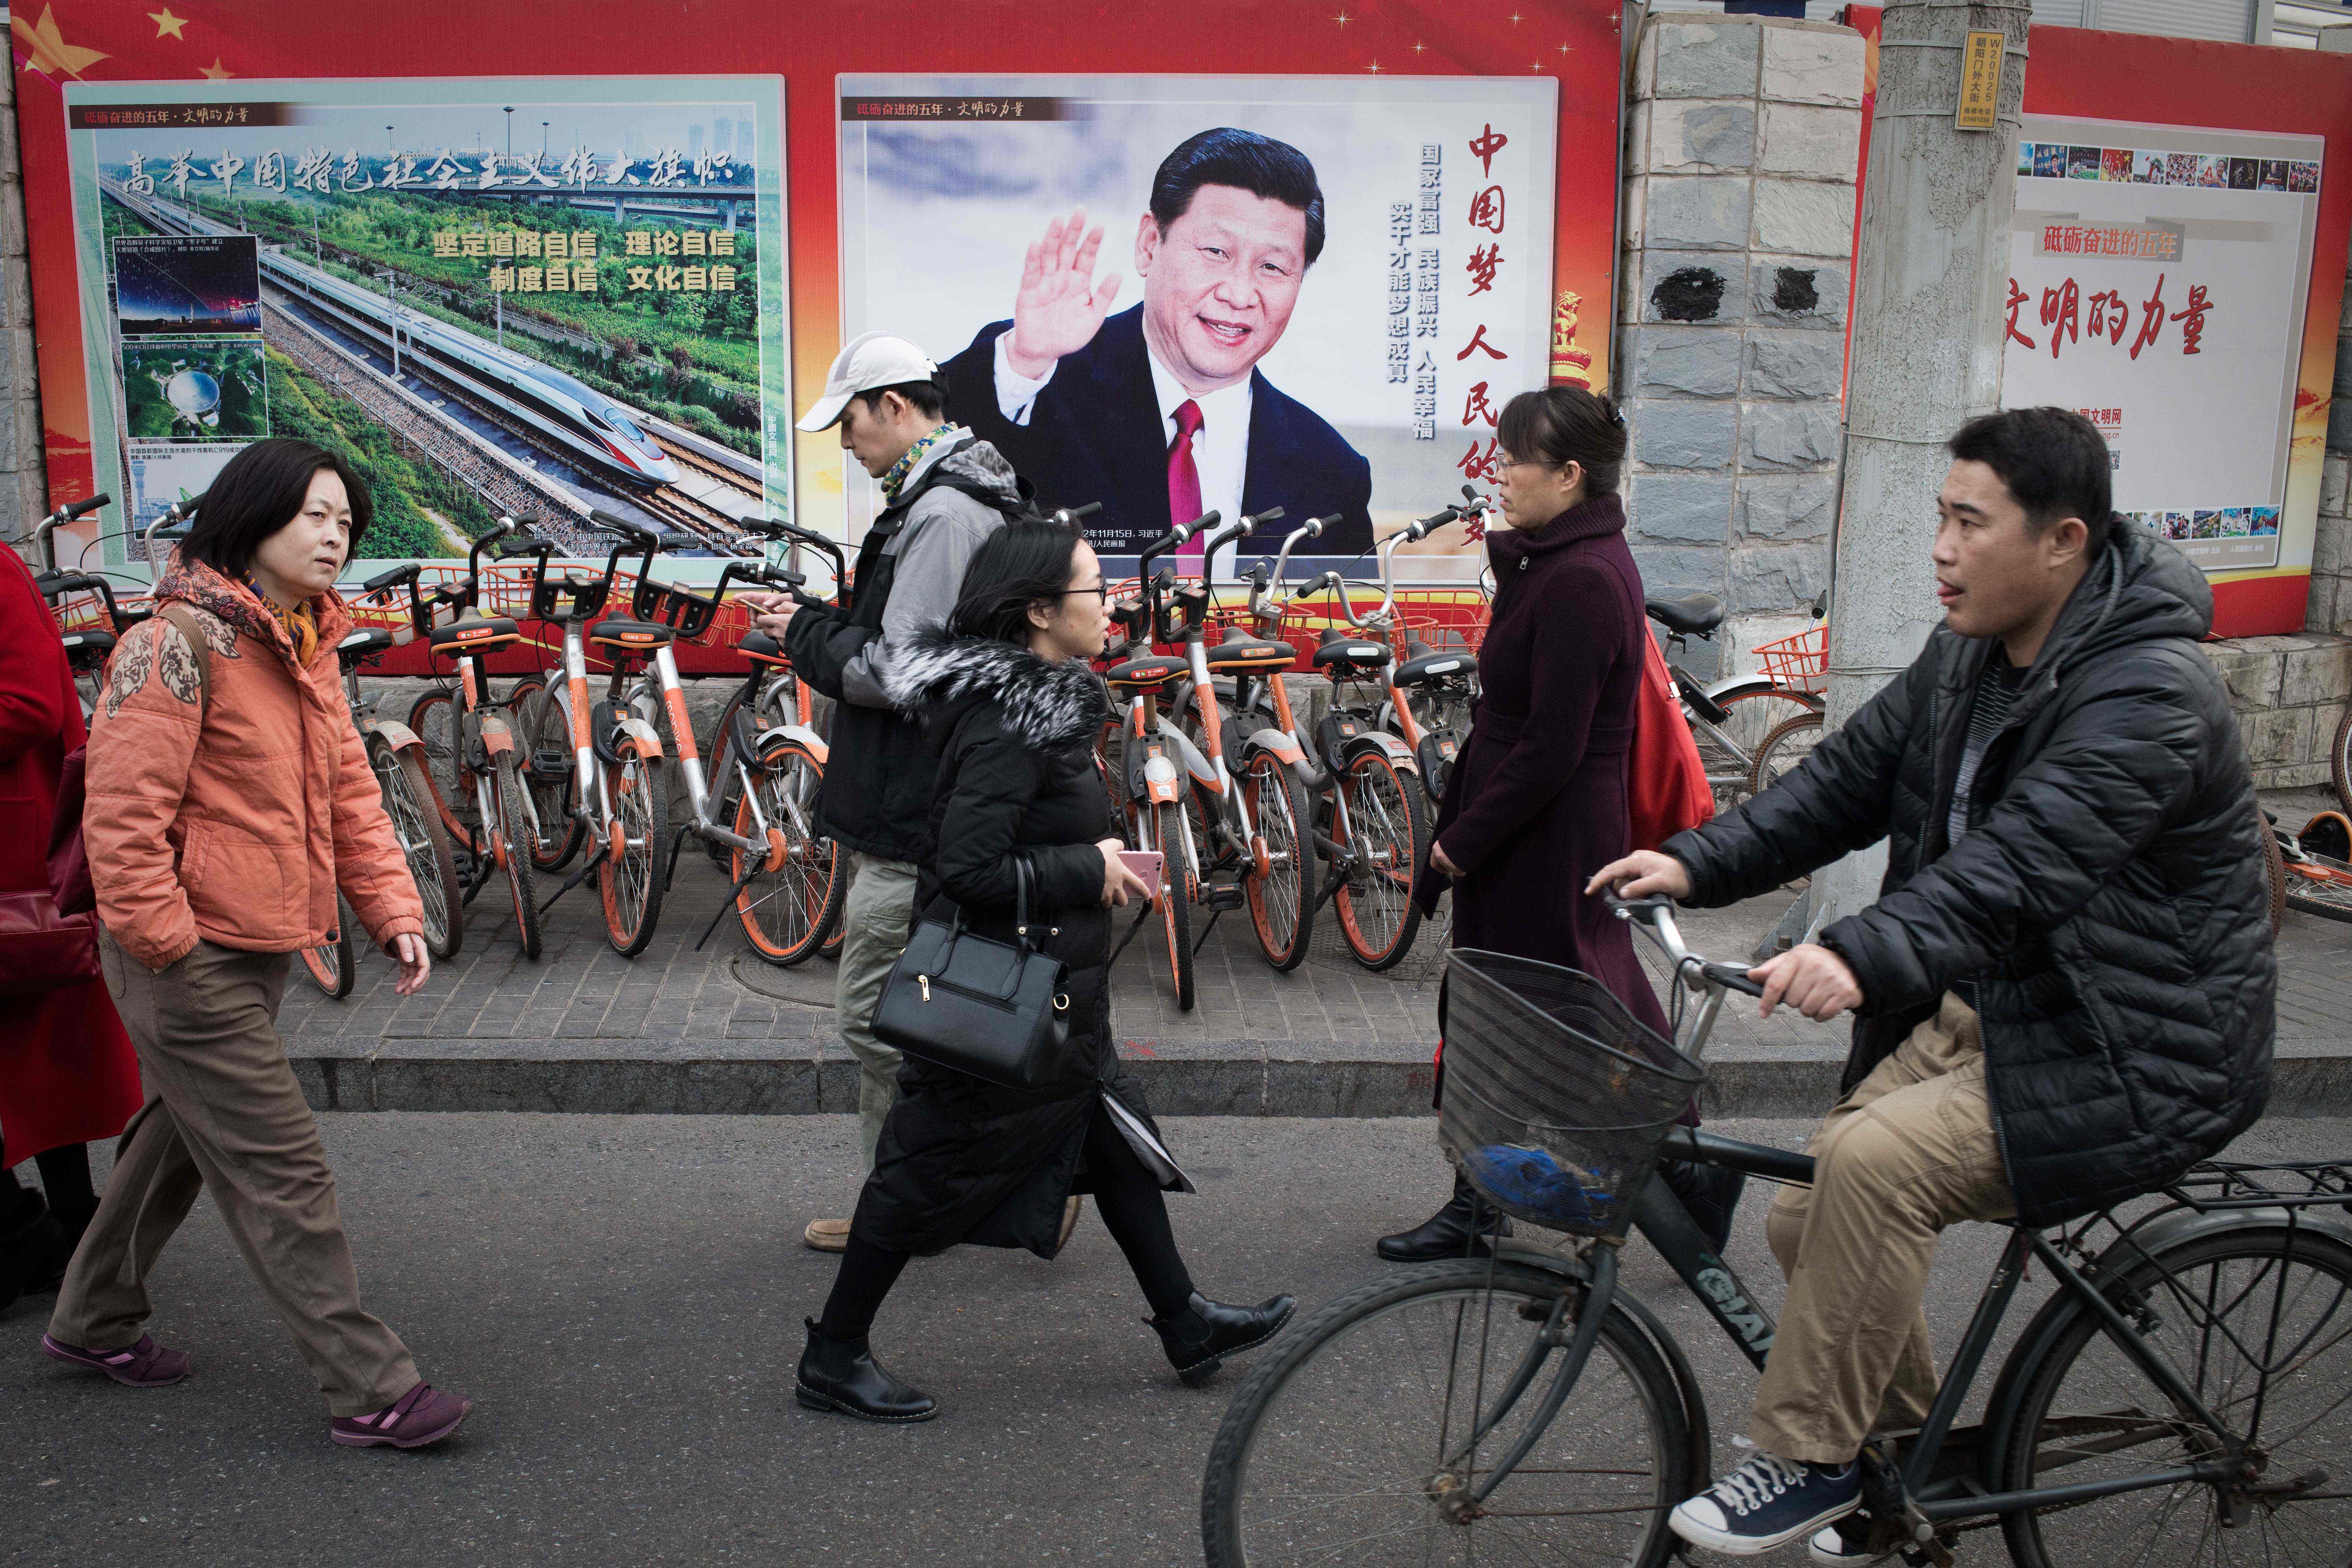 Is President Xi ushering in a new era of AI-led communism?